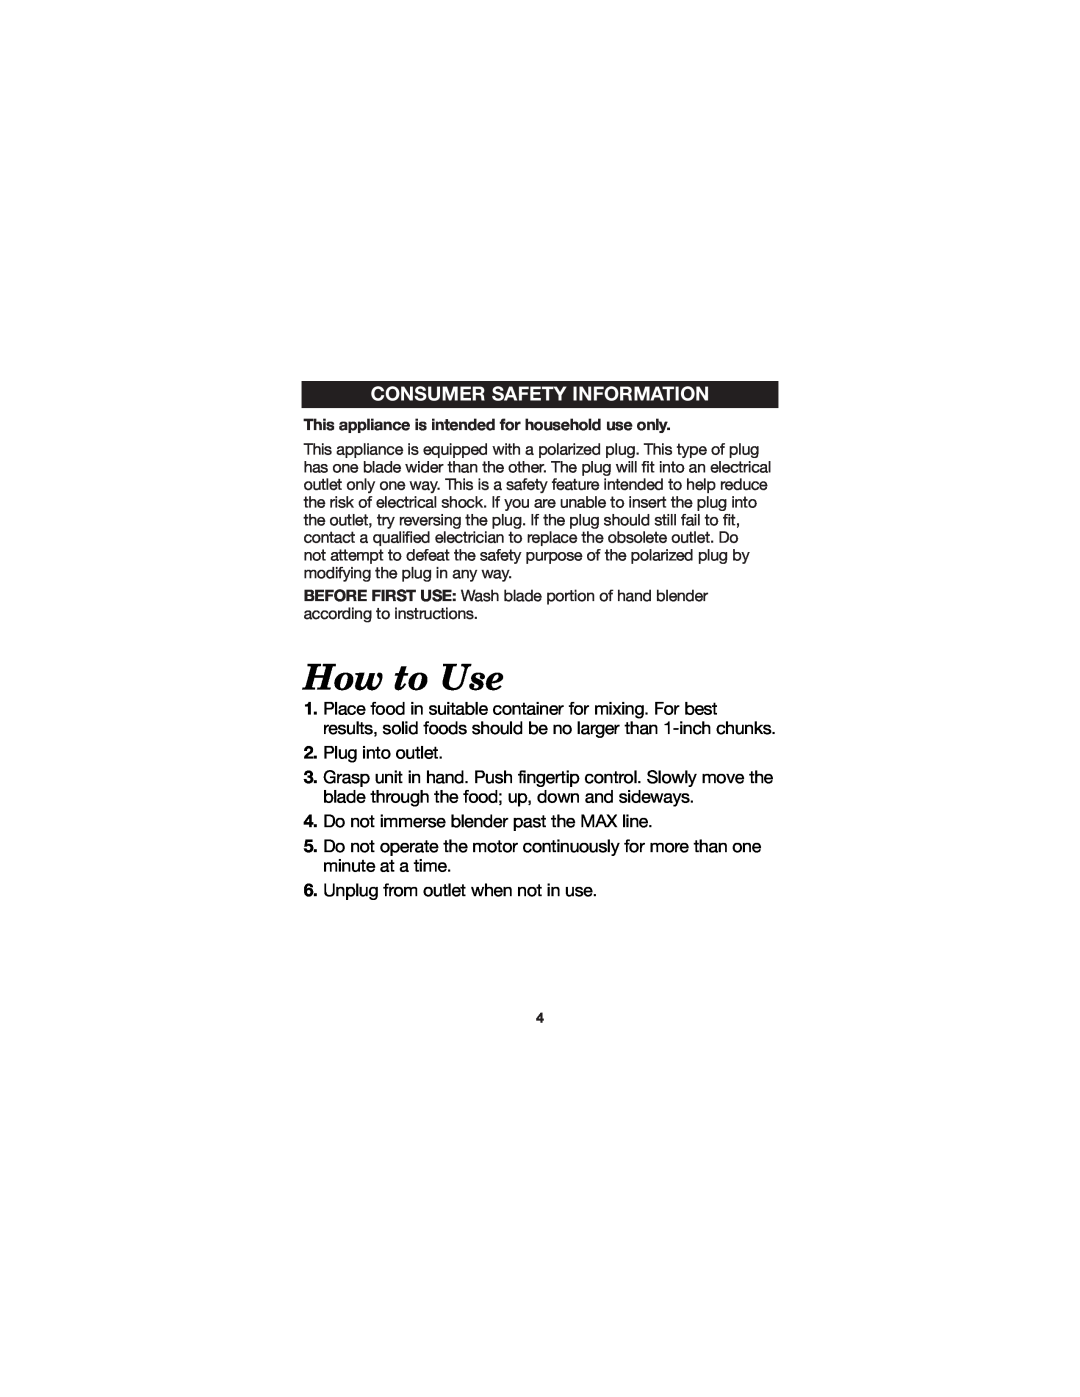 Hamilton Beach 840083300 manual How to Use, Consumer Safety Information 